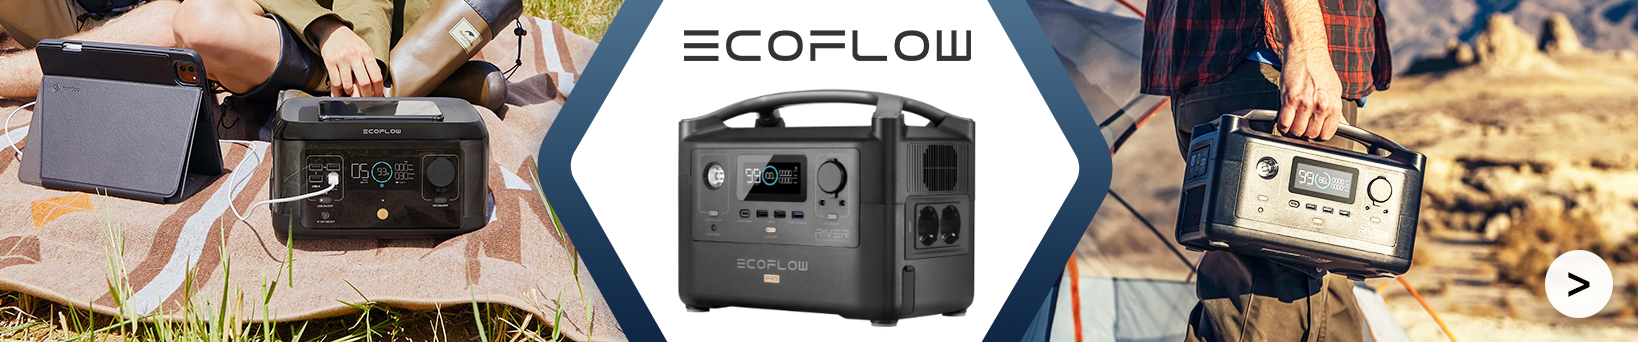 Ecoflow, la station energie portable